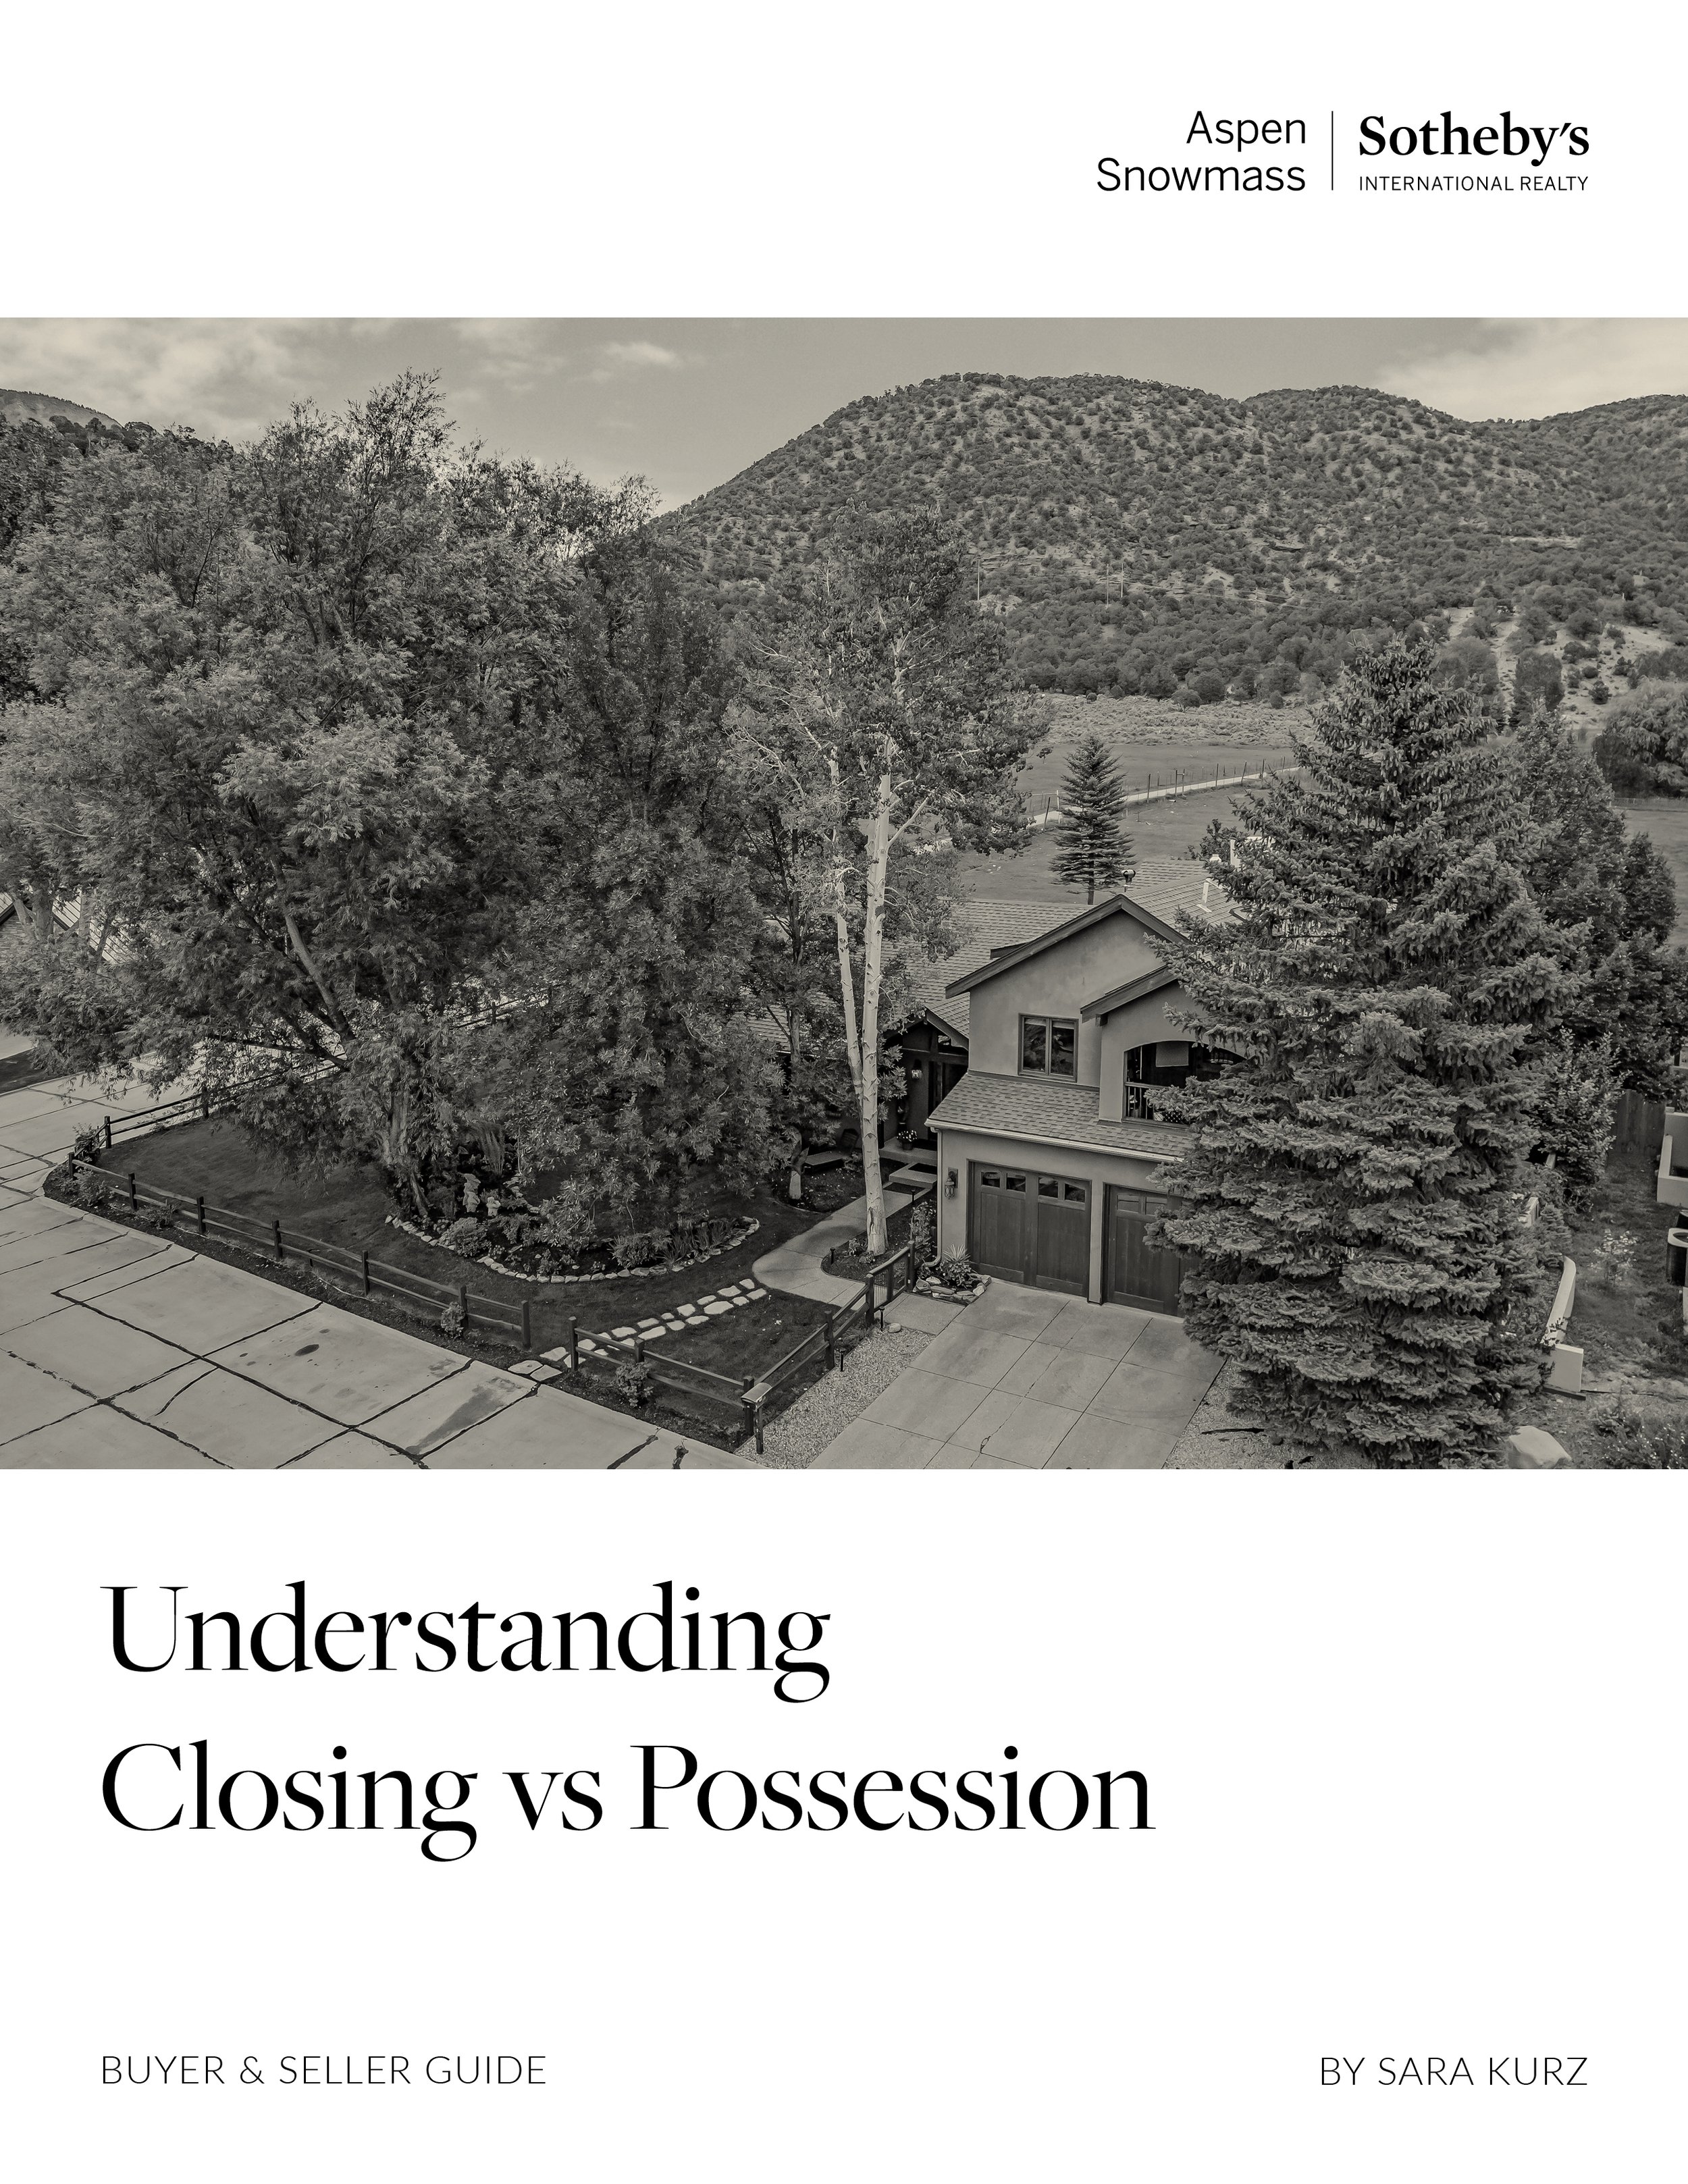 Closing vs Possession Feb 2023 Cover.jpg